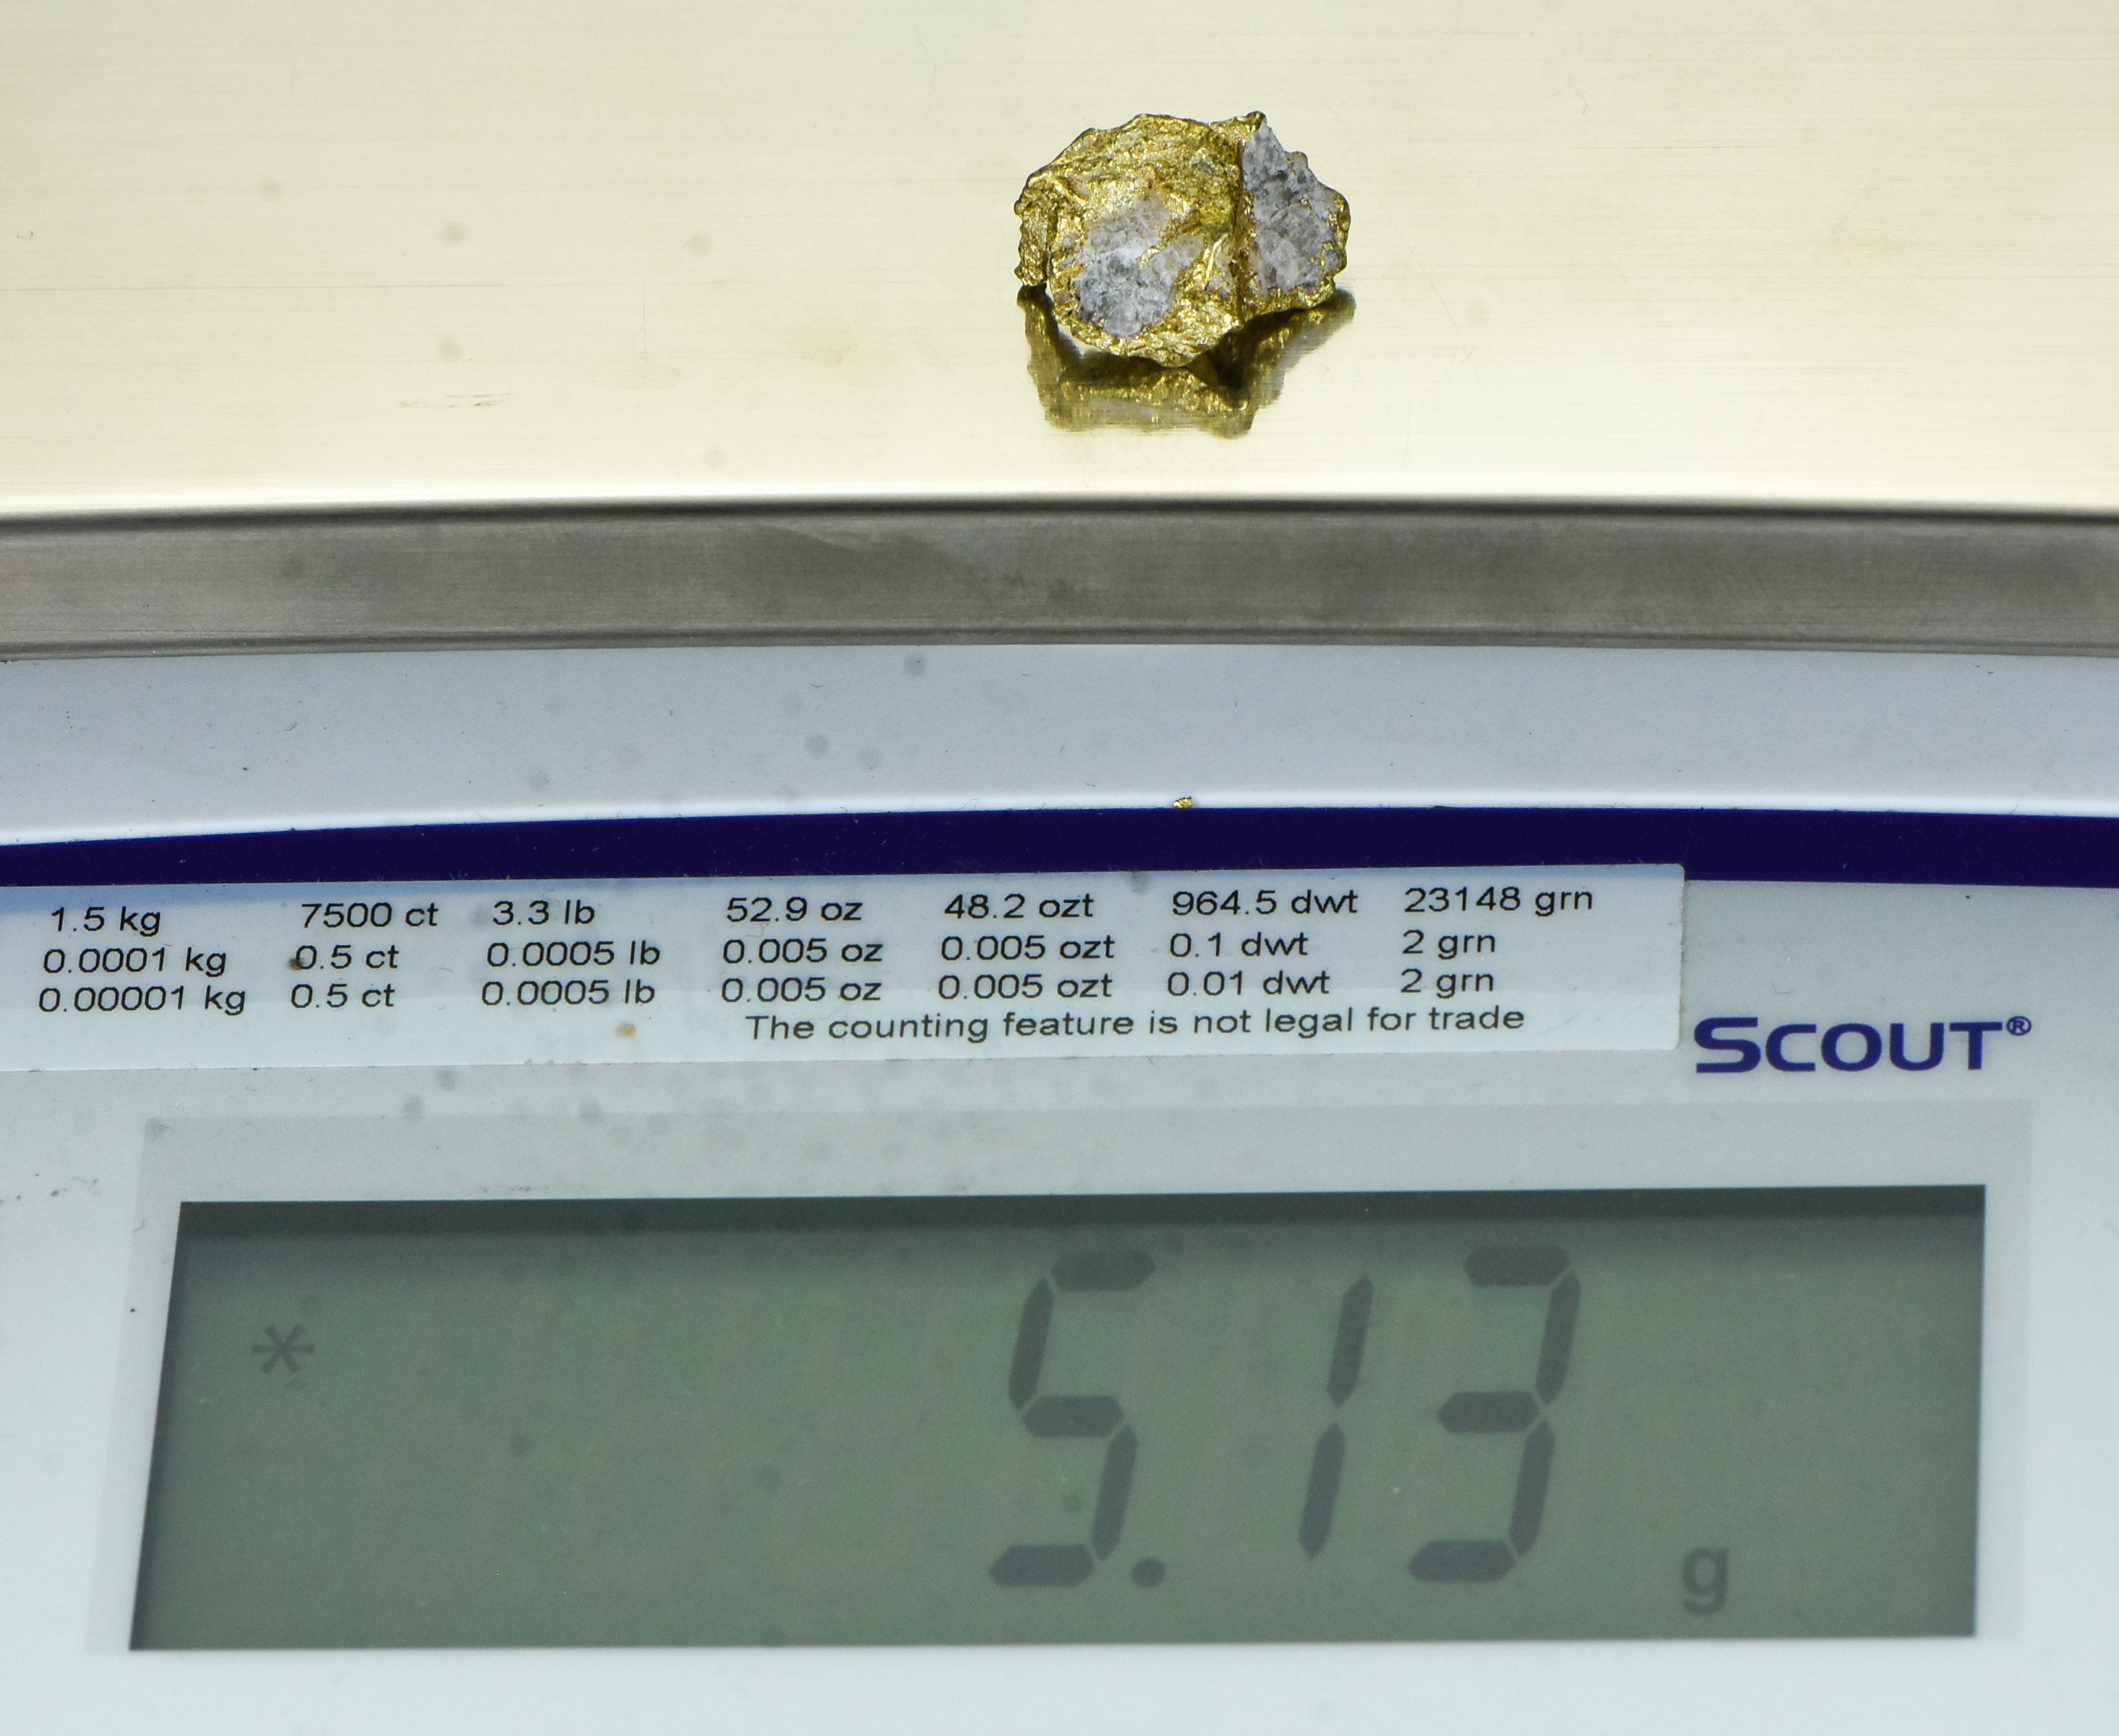 QN-12 "Alaskan BC Gold Nuggets with Quartz" Genuine 5.13 Grams